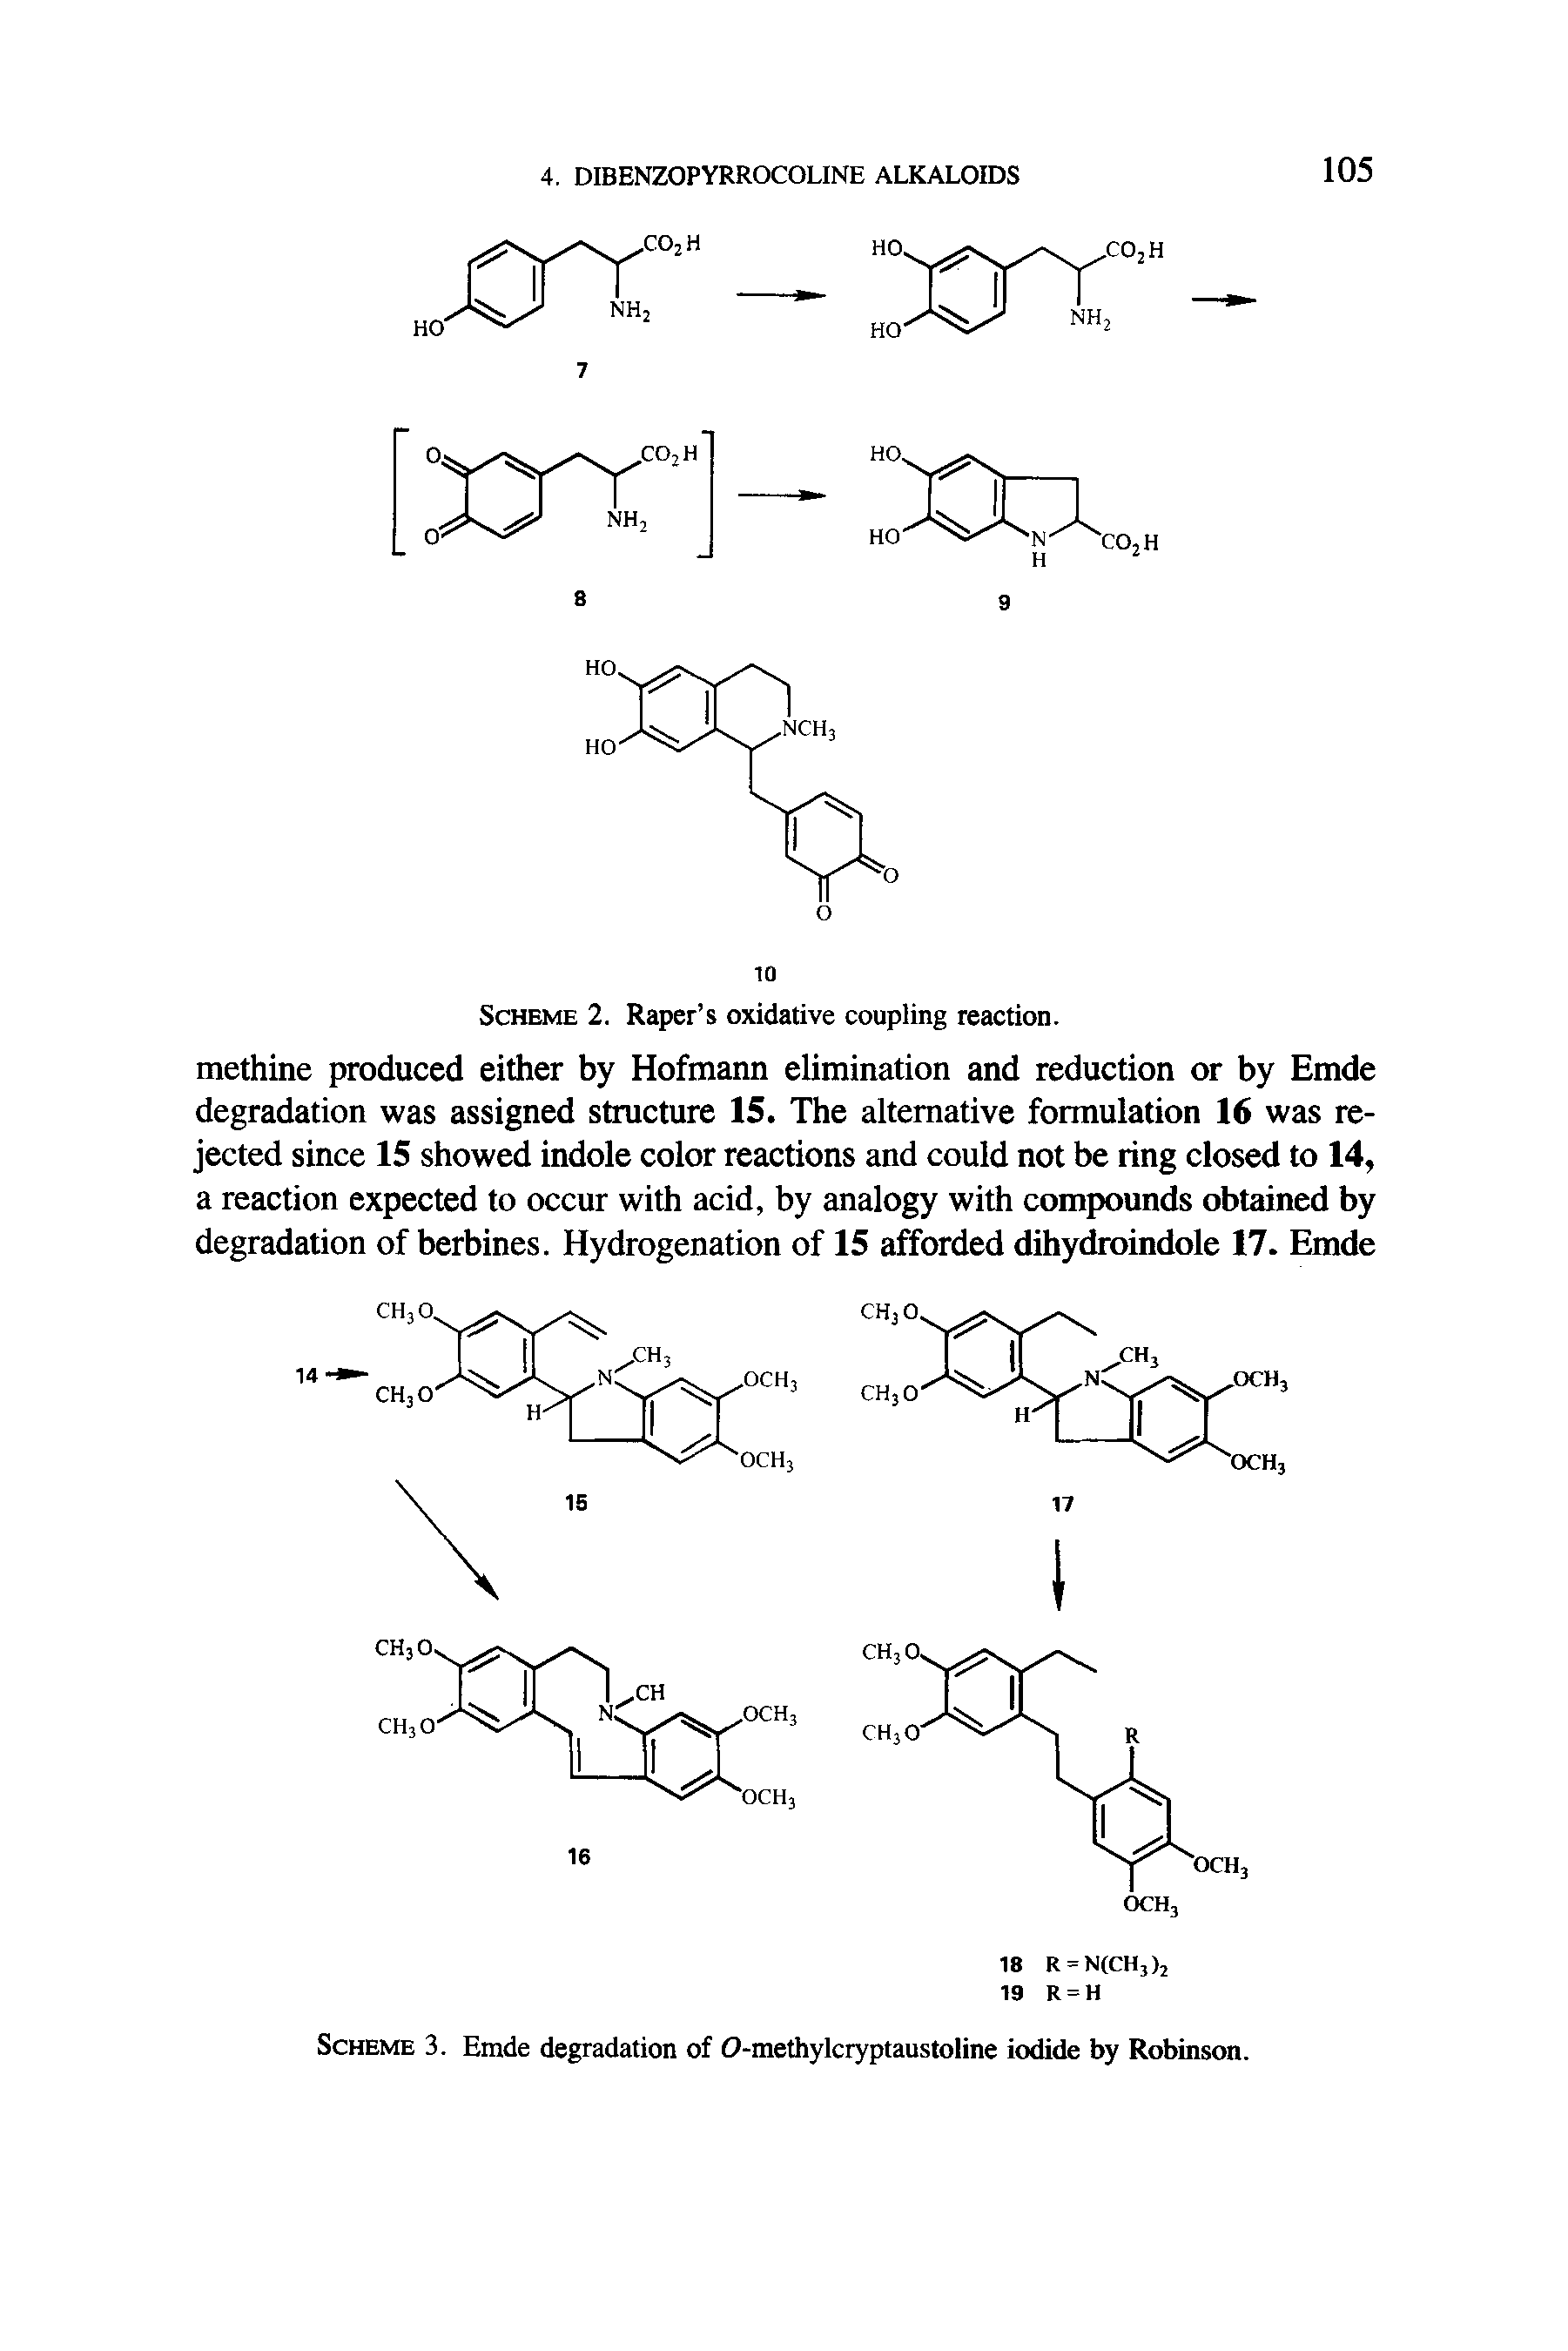 Scheme 3. Emde degradation of 0-methylcryptaustoline iodide by Robinson.